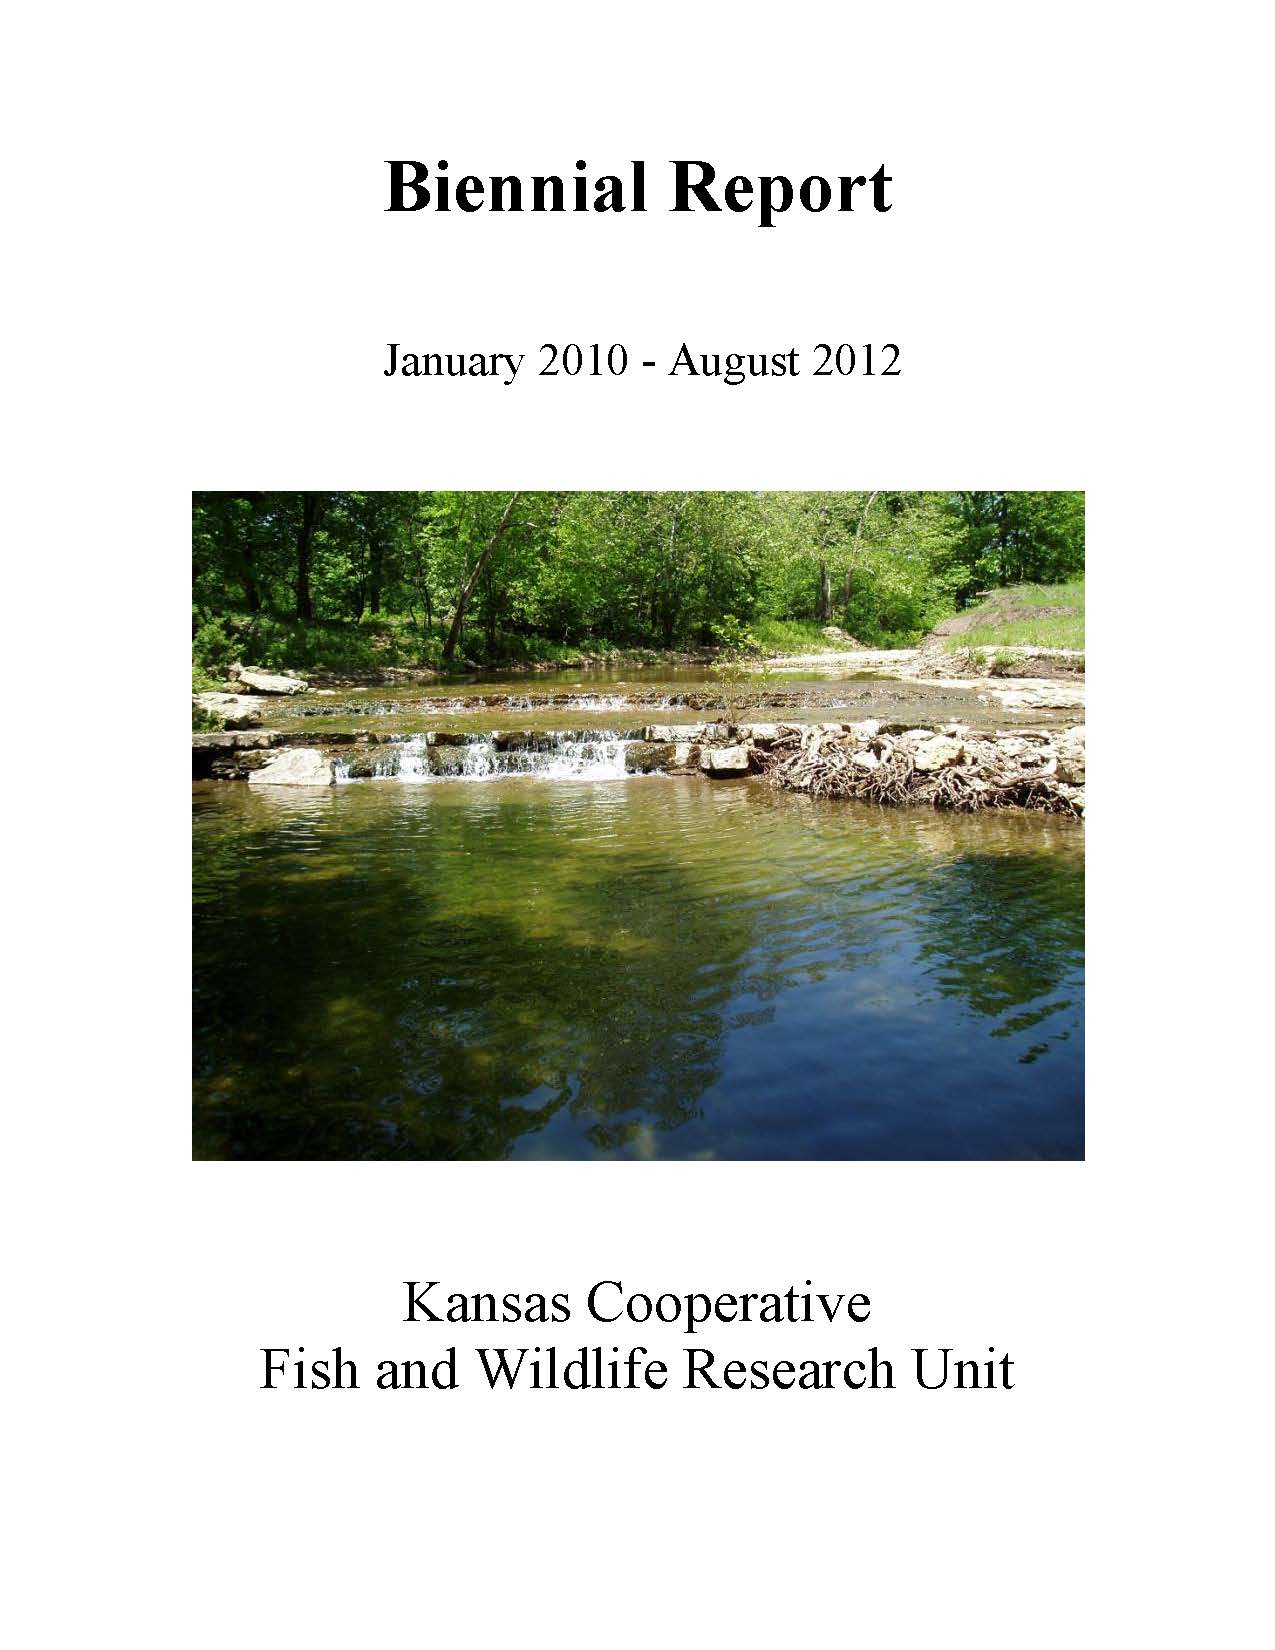 KSCFWRU Biennial Report 2012